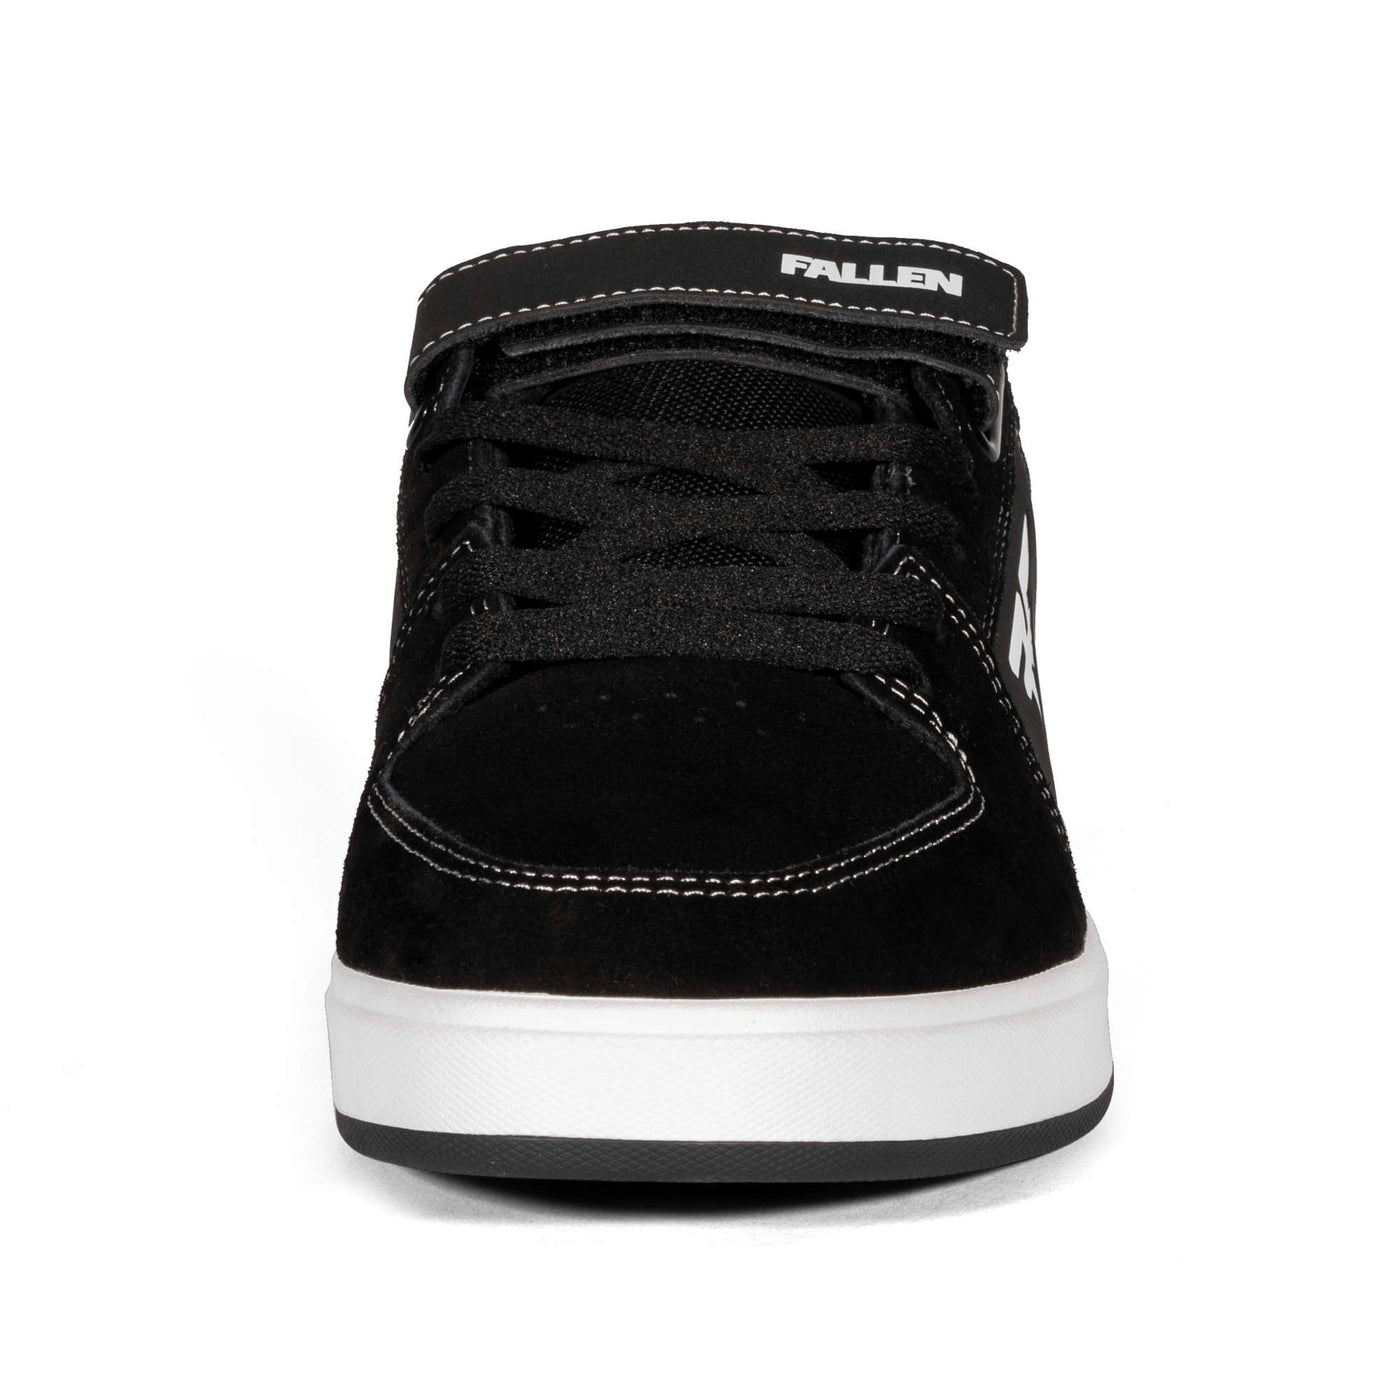 Fallen Footwear Patriot Strap skate shoes in Black / White front image